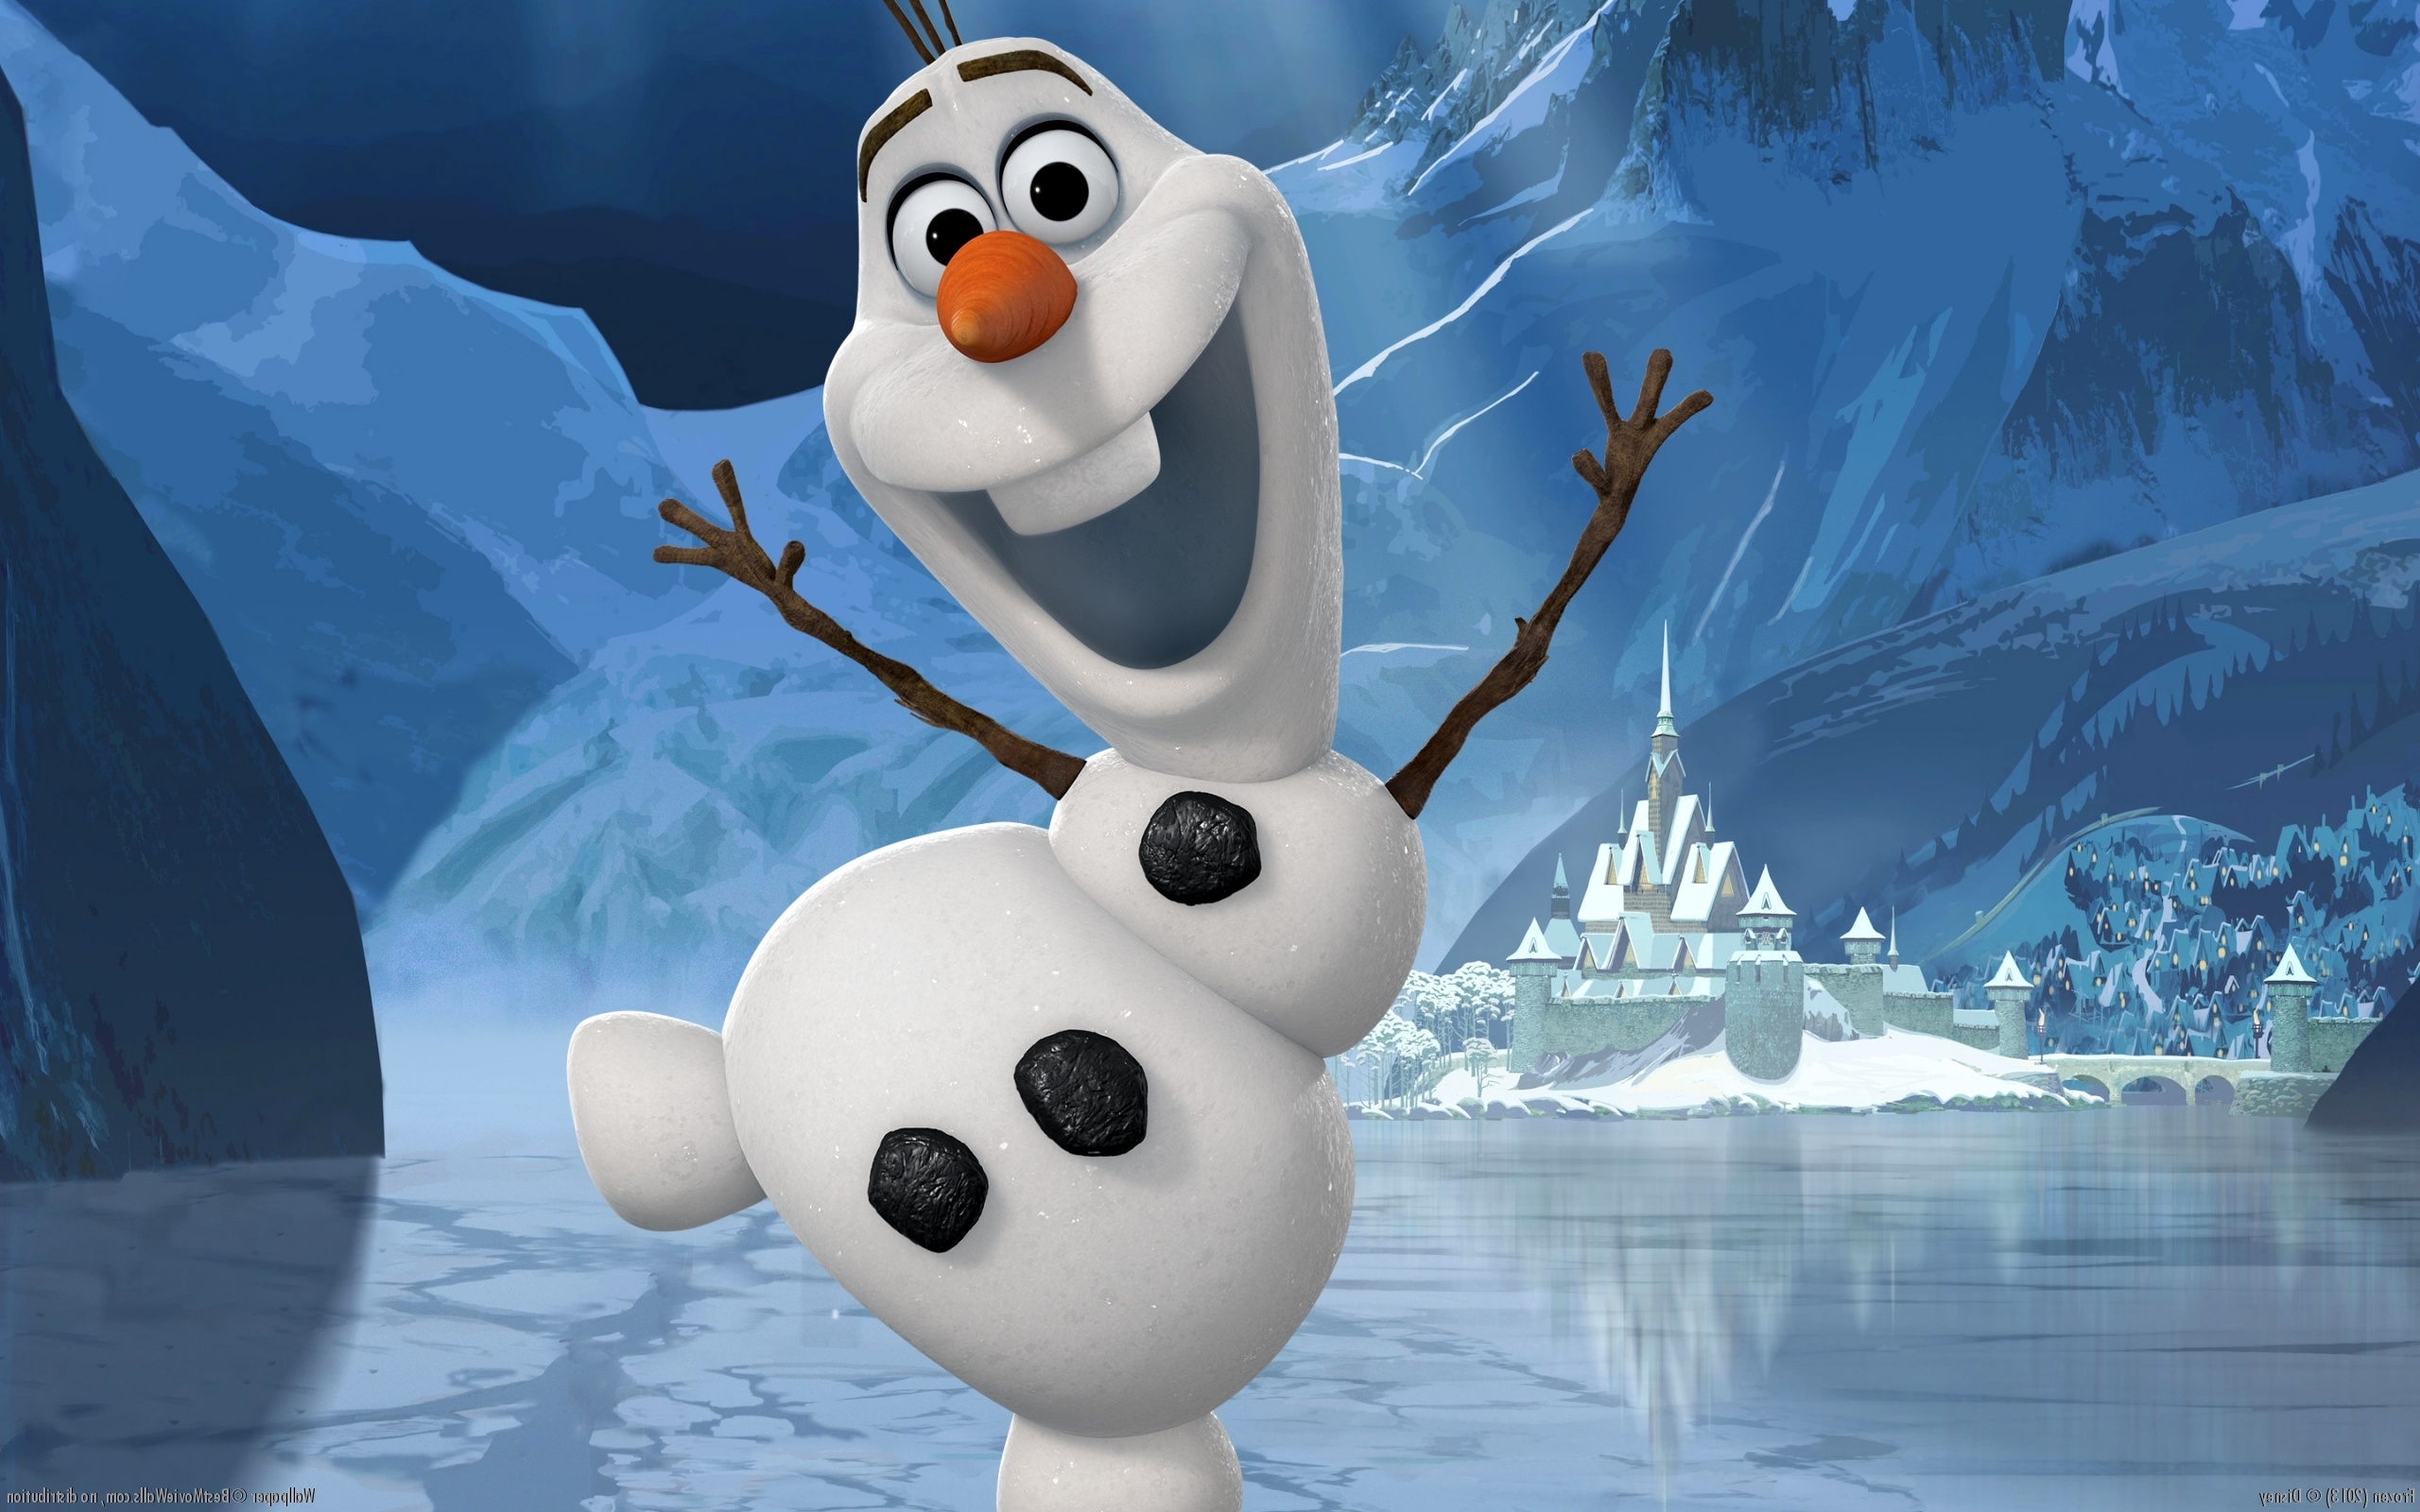 Photo Collection Wallpaper Frozen Movie Olaf Desktop Atlanta Pinterest Download